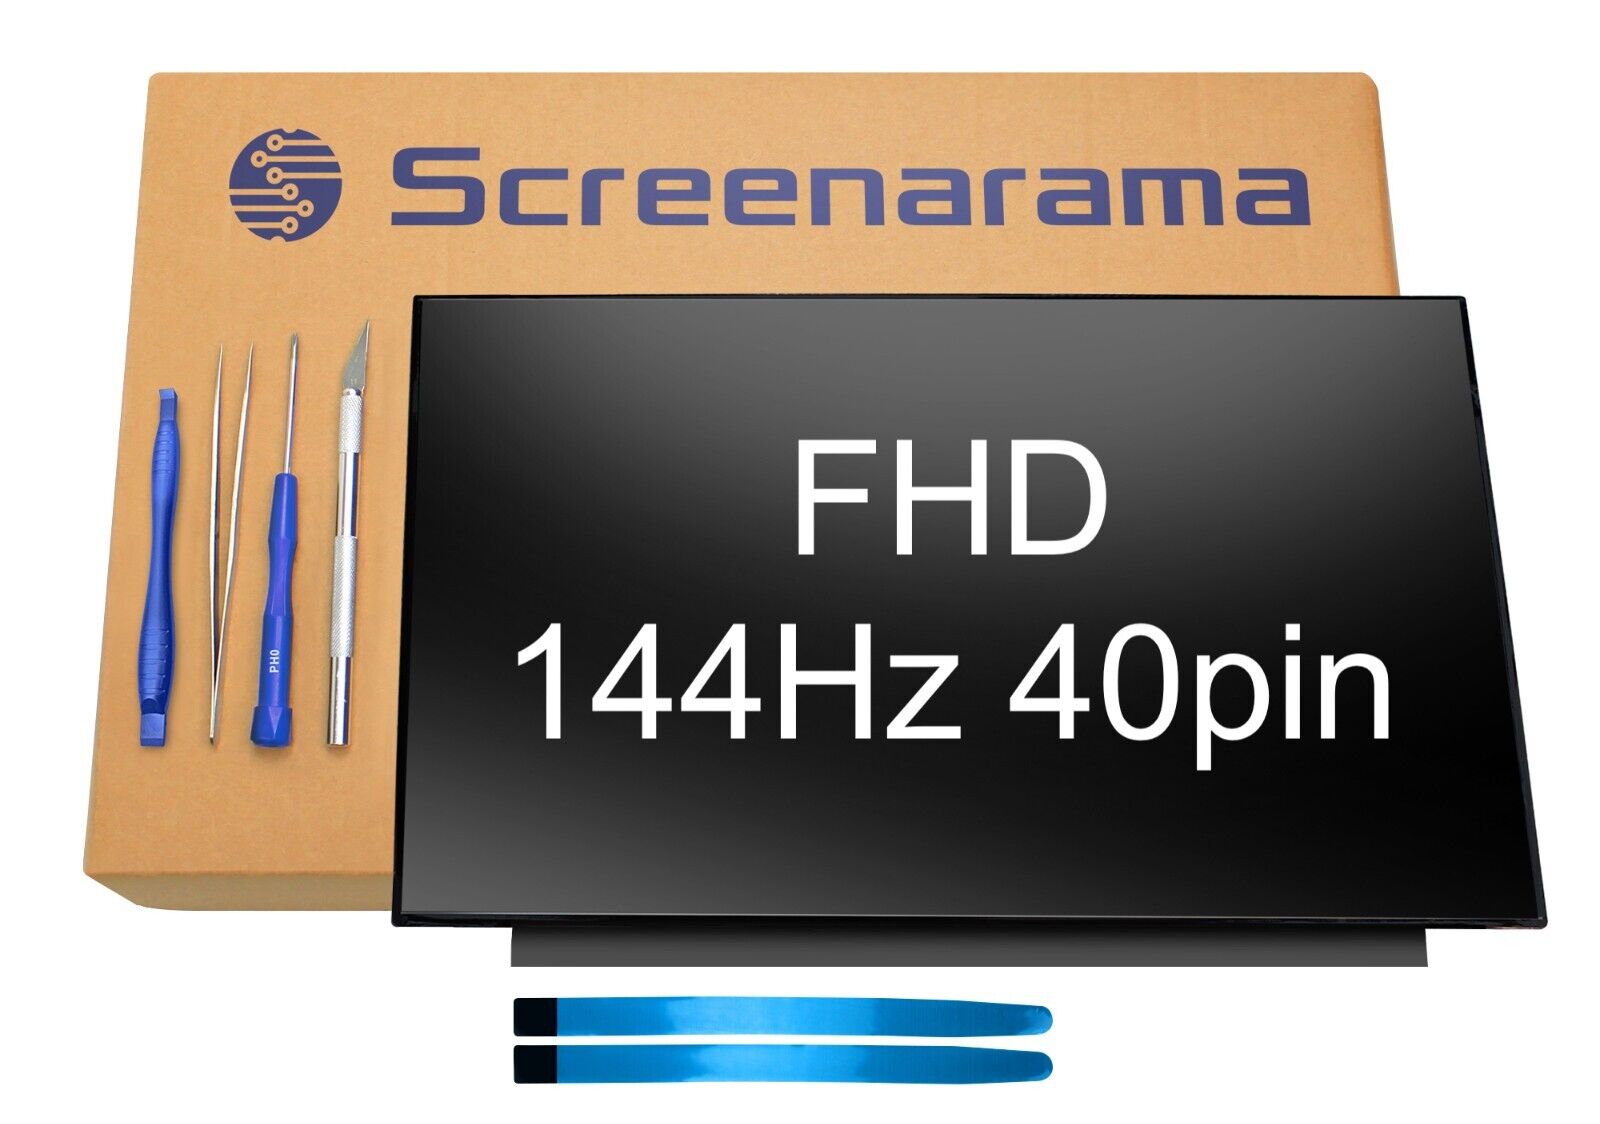 BOE NE156FHM-NX3 V18.0 FHD 144Hz 40pin LED LCD Screen + Tools SCREENARAMA * FAST